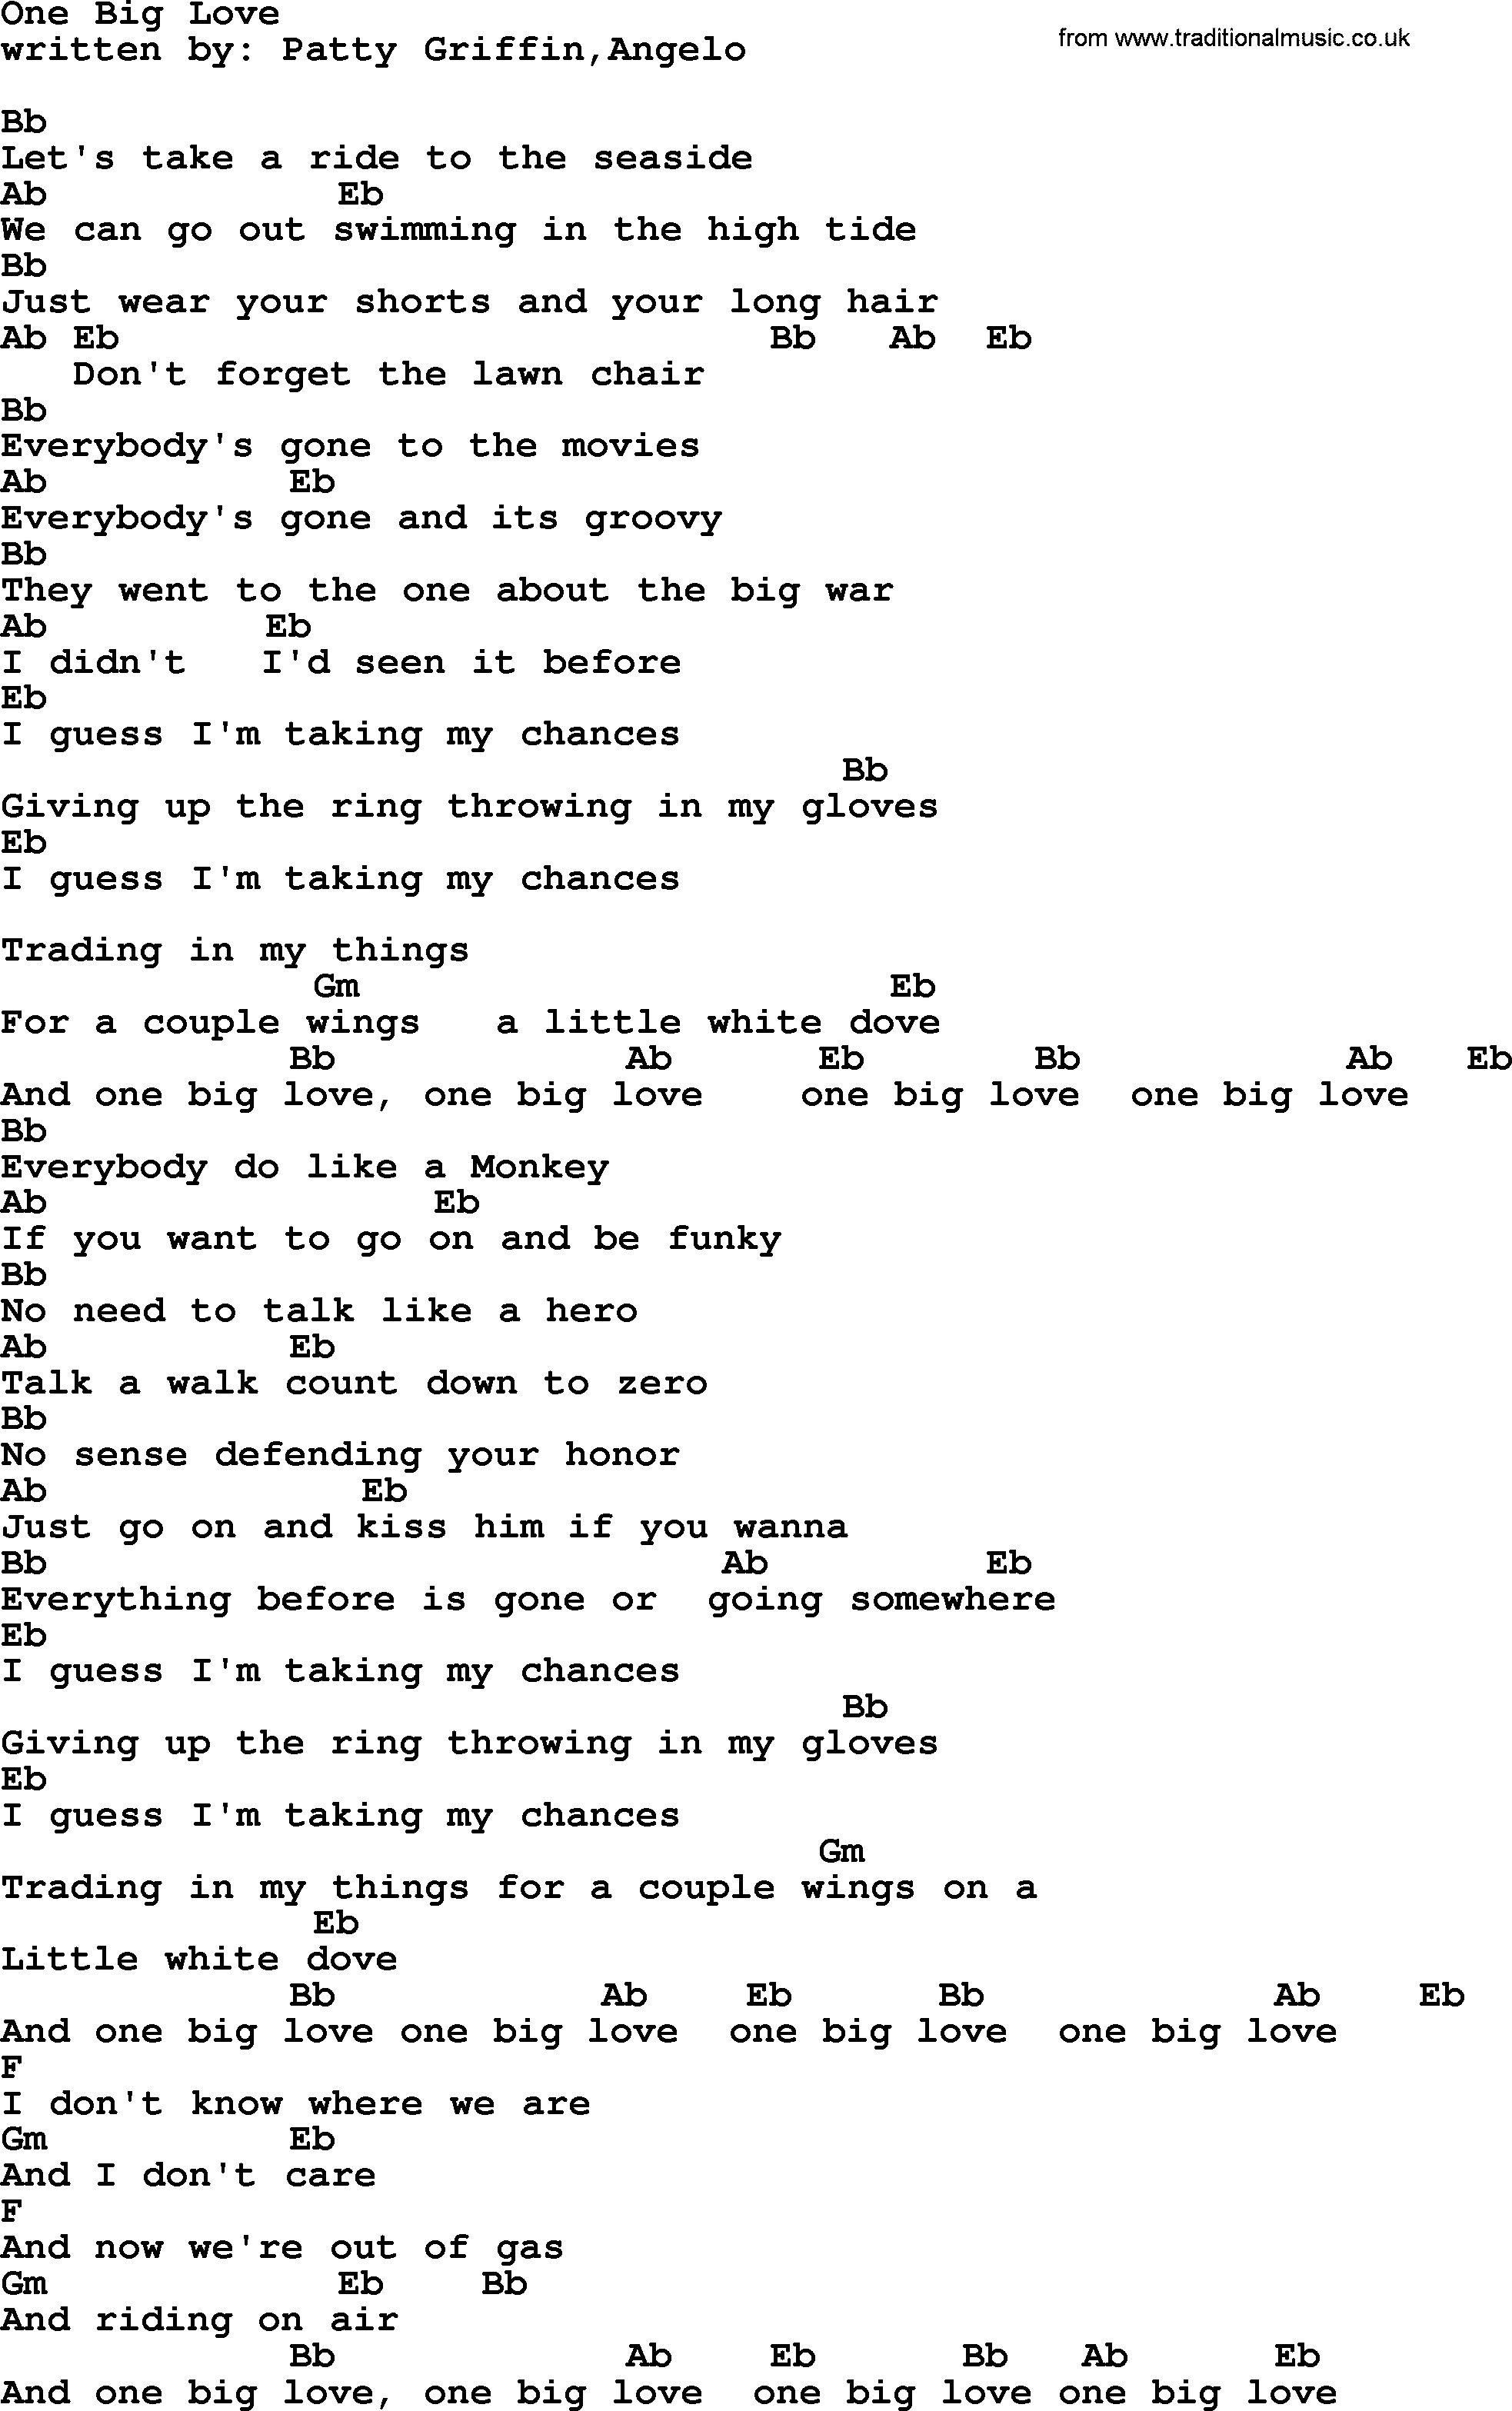 Emmylou Harris song: One Big Love lyrics and chords